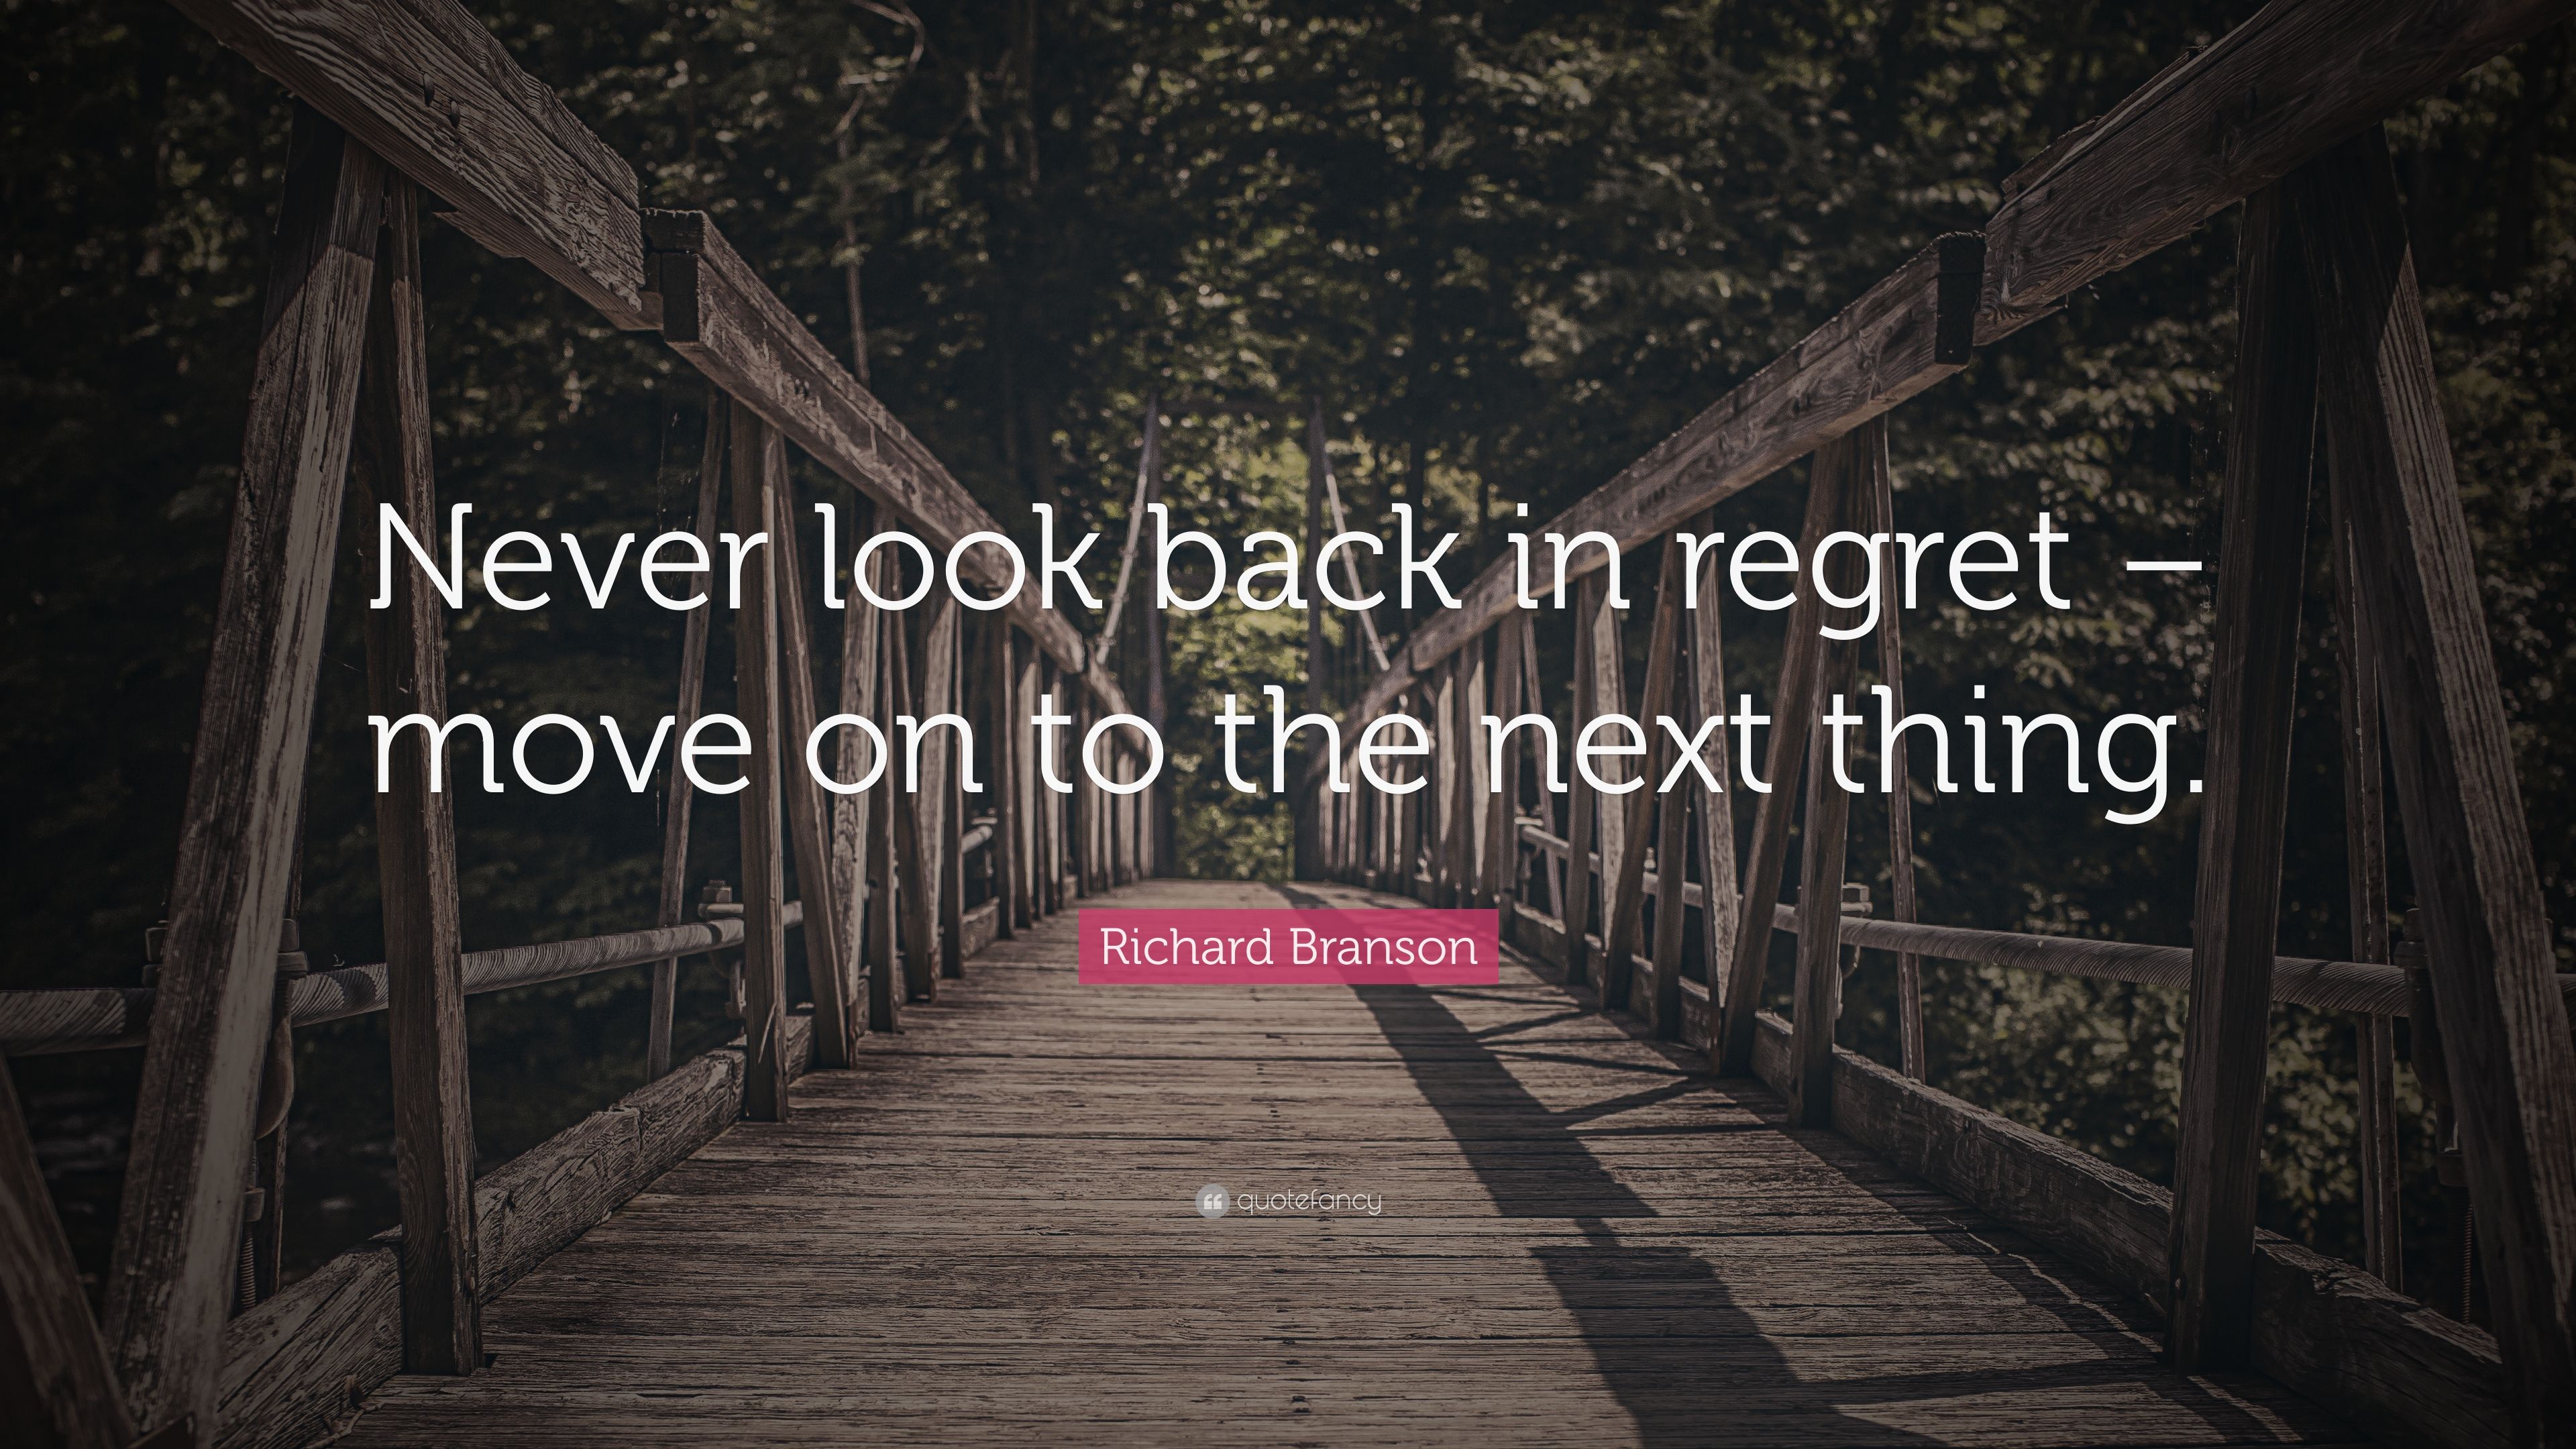 Richard Branson Quote: “Never look back in regret